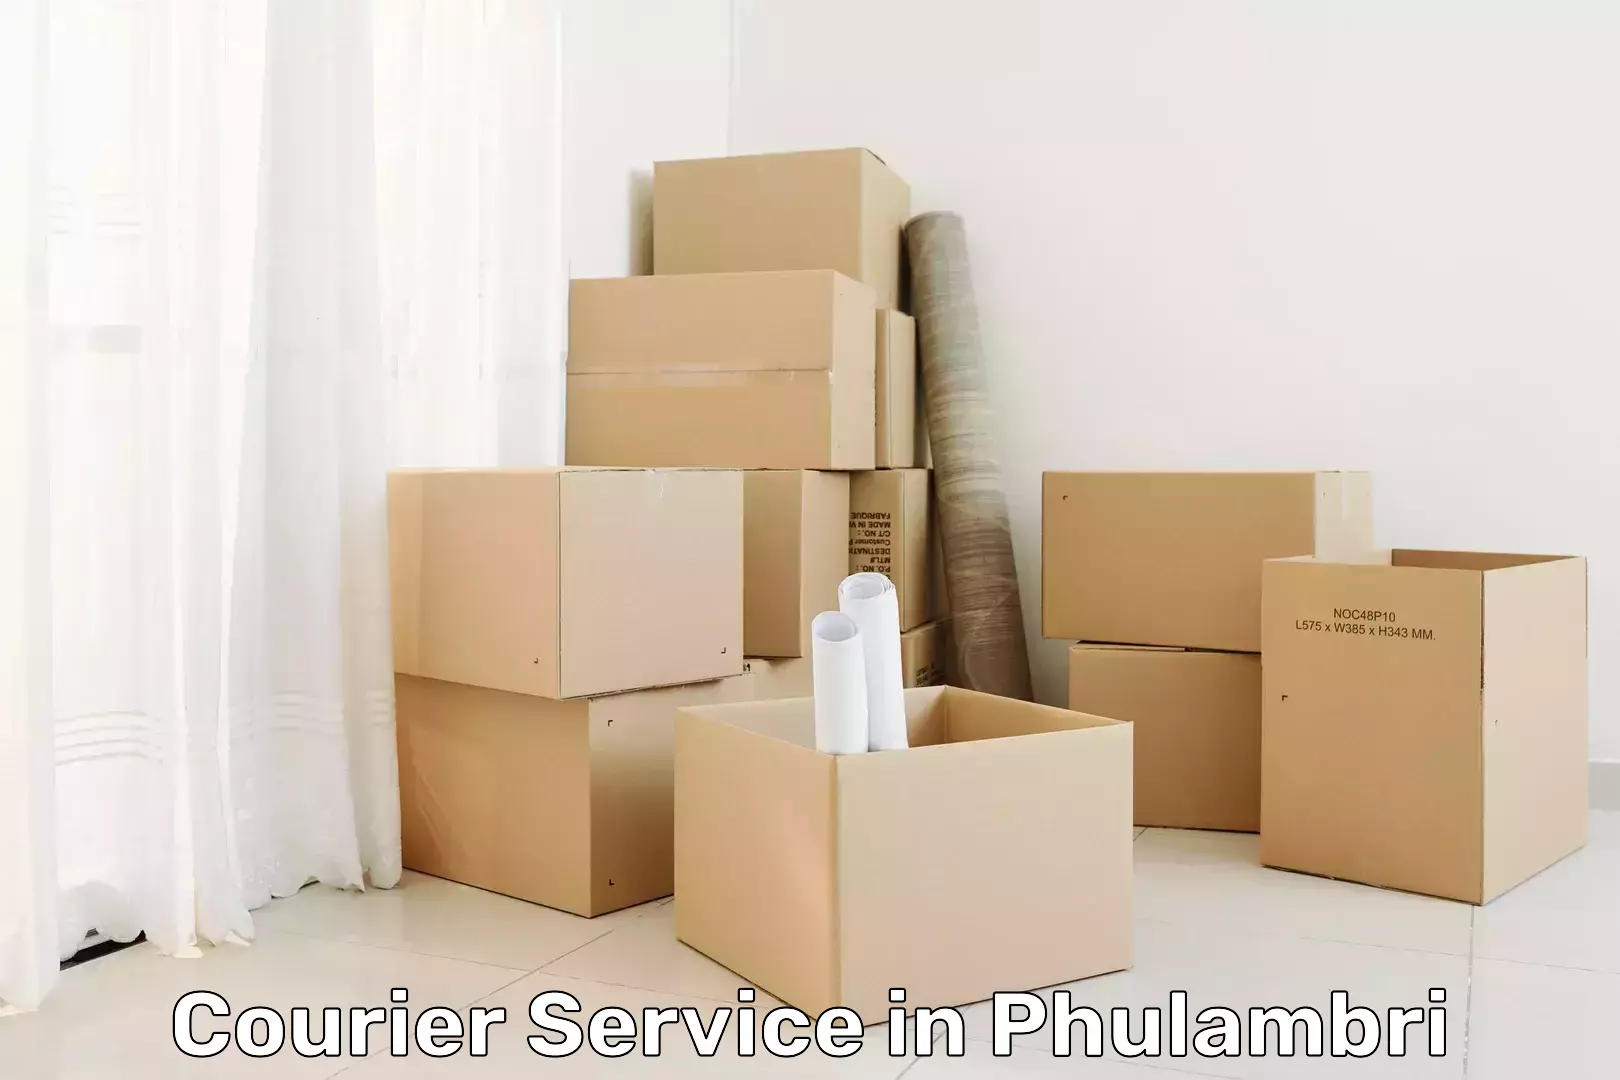 Customer-centric shipping in Phulambri